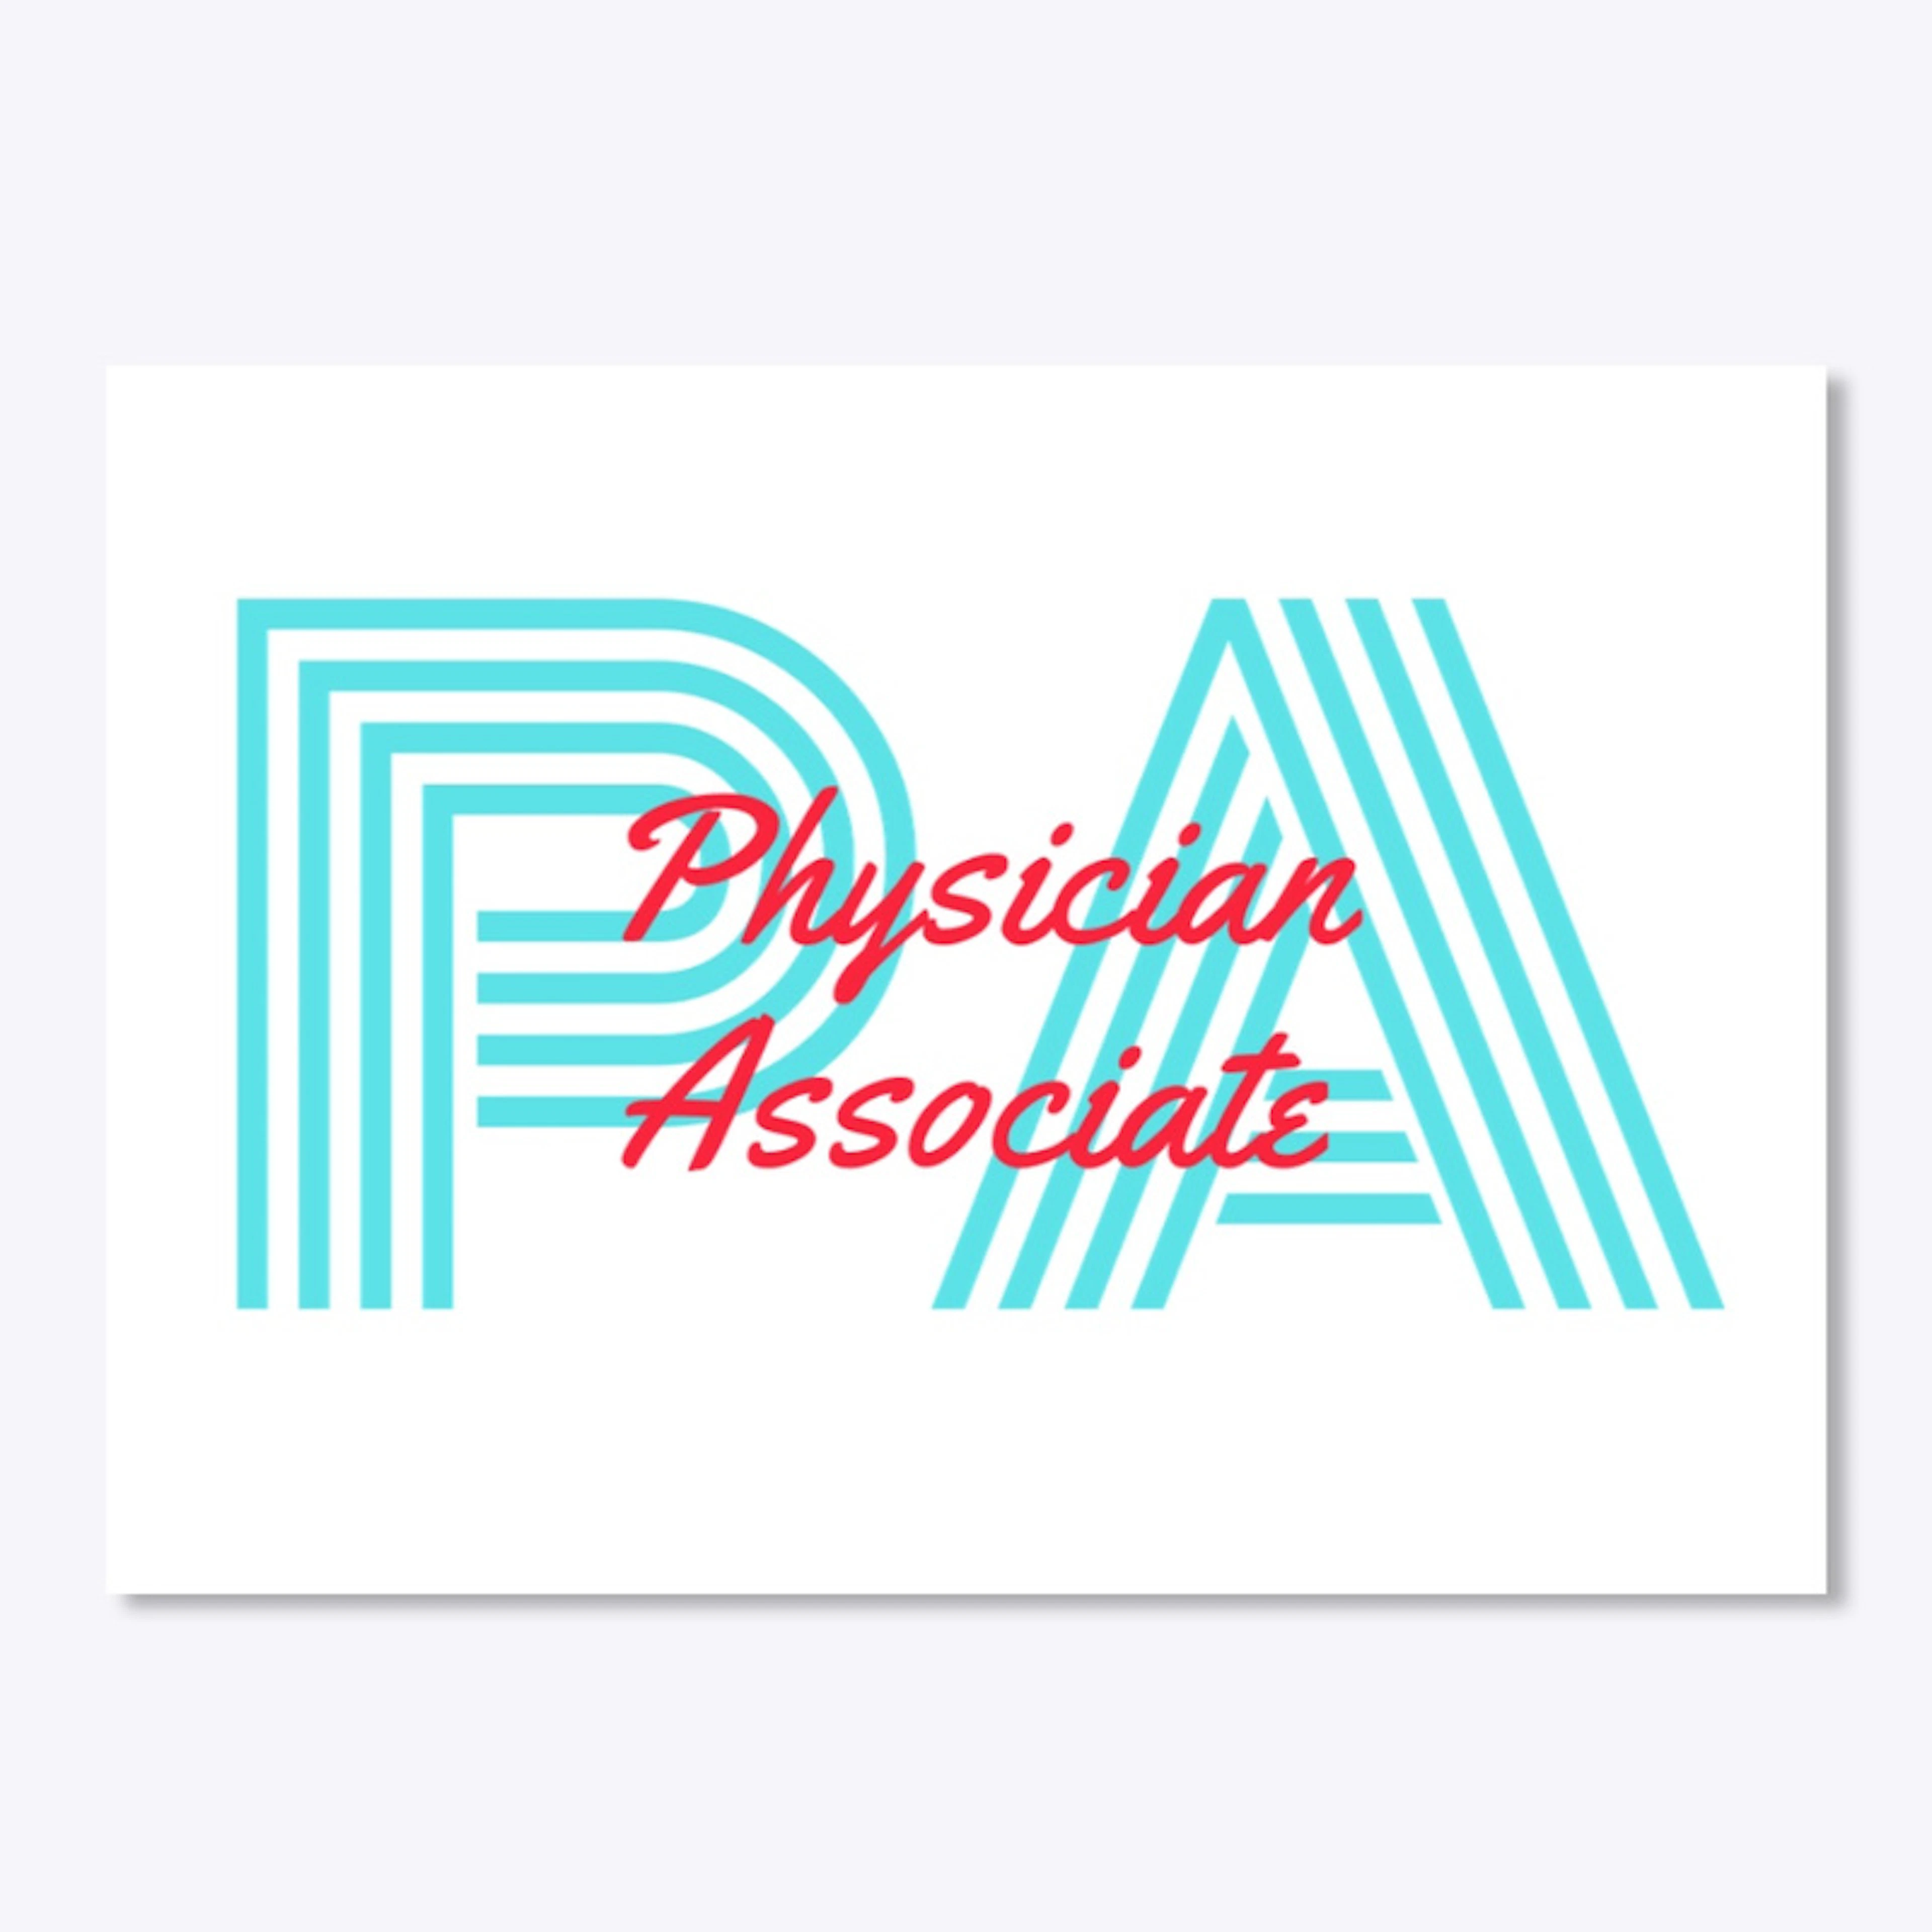 PA Physician Associate